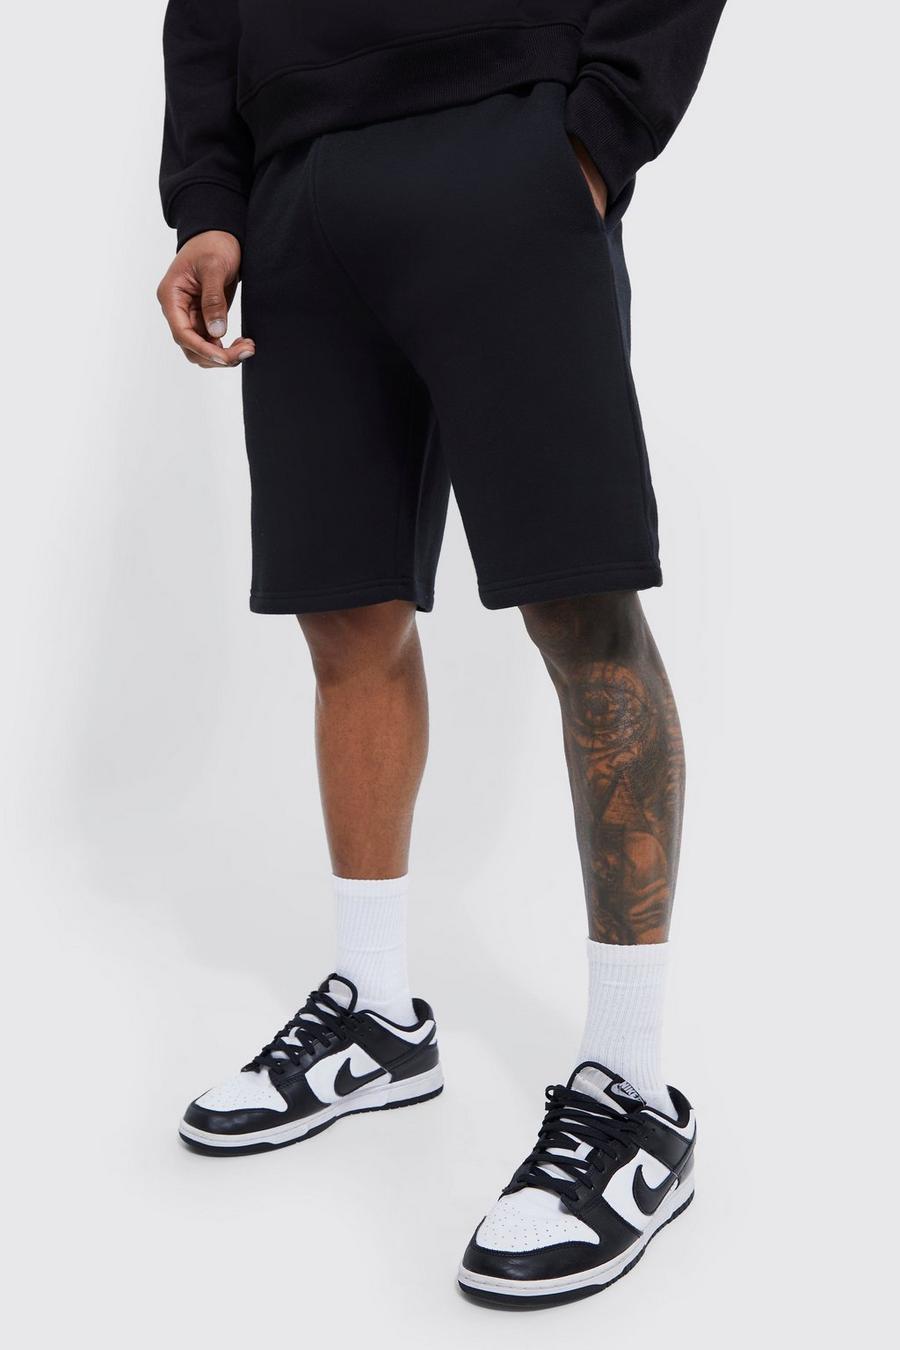 Lockere mittellange Basic Jersey-Shorts, Black noir